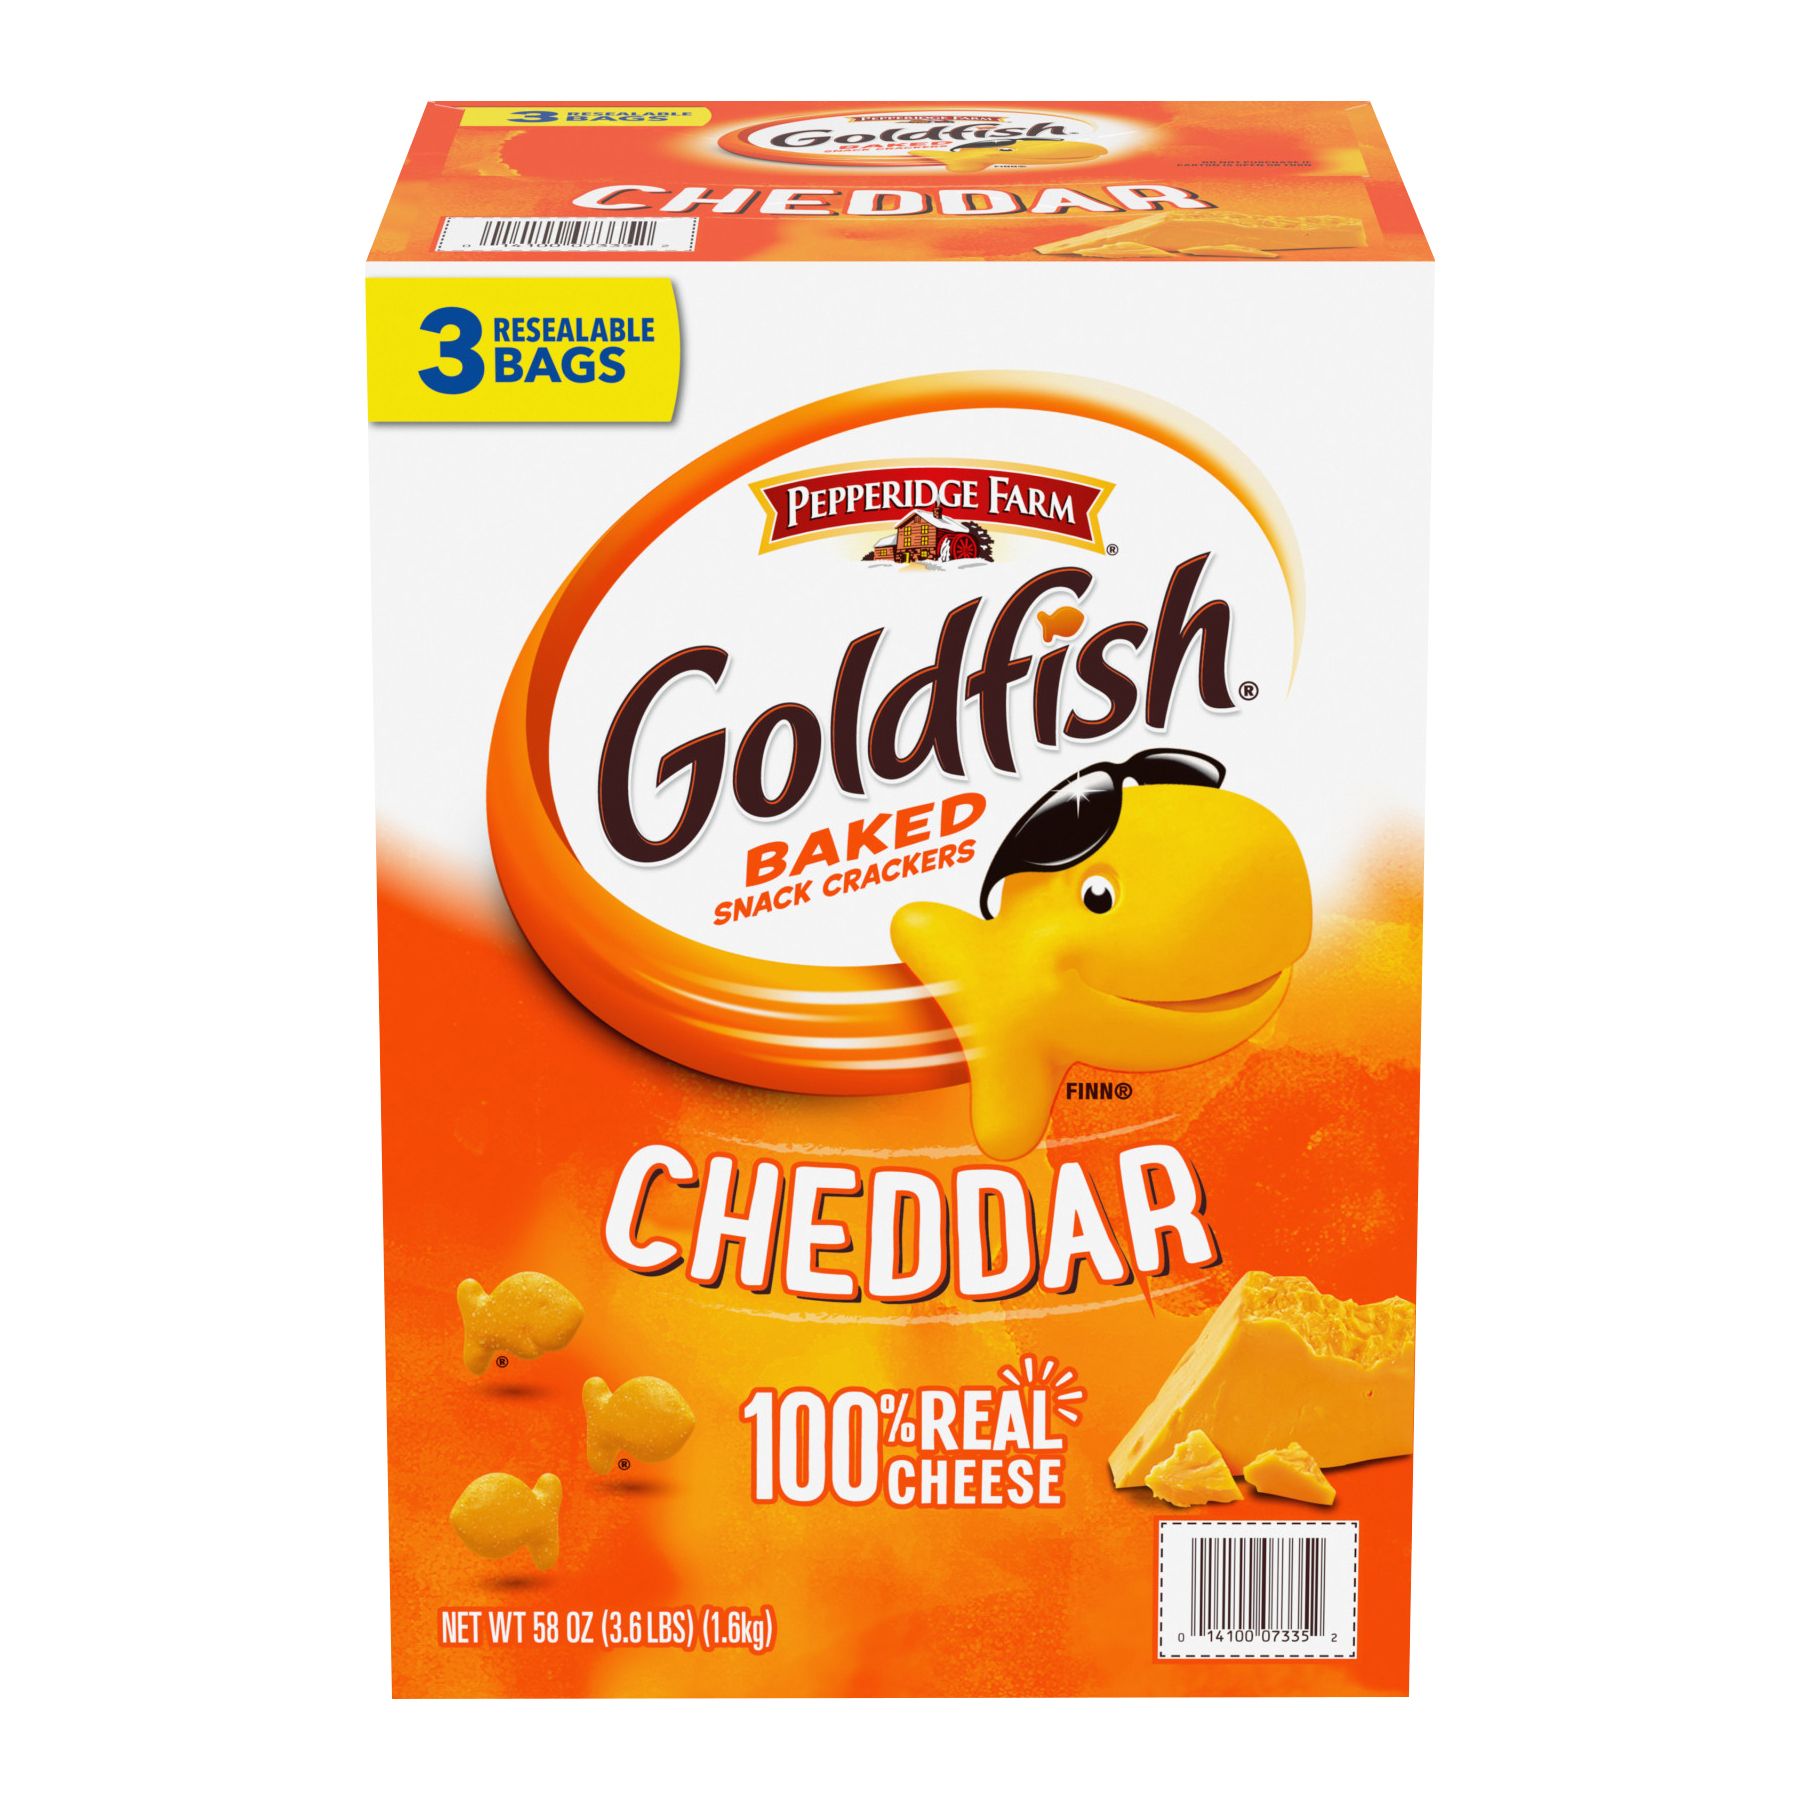 types of goldfish crackers